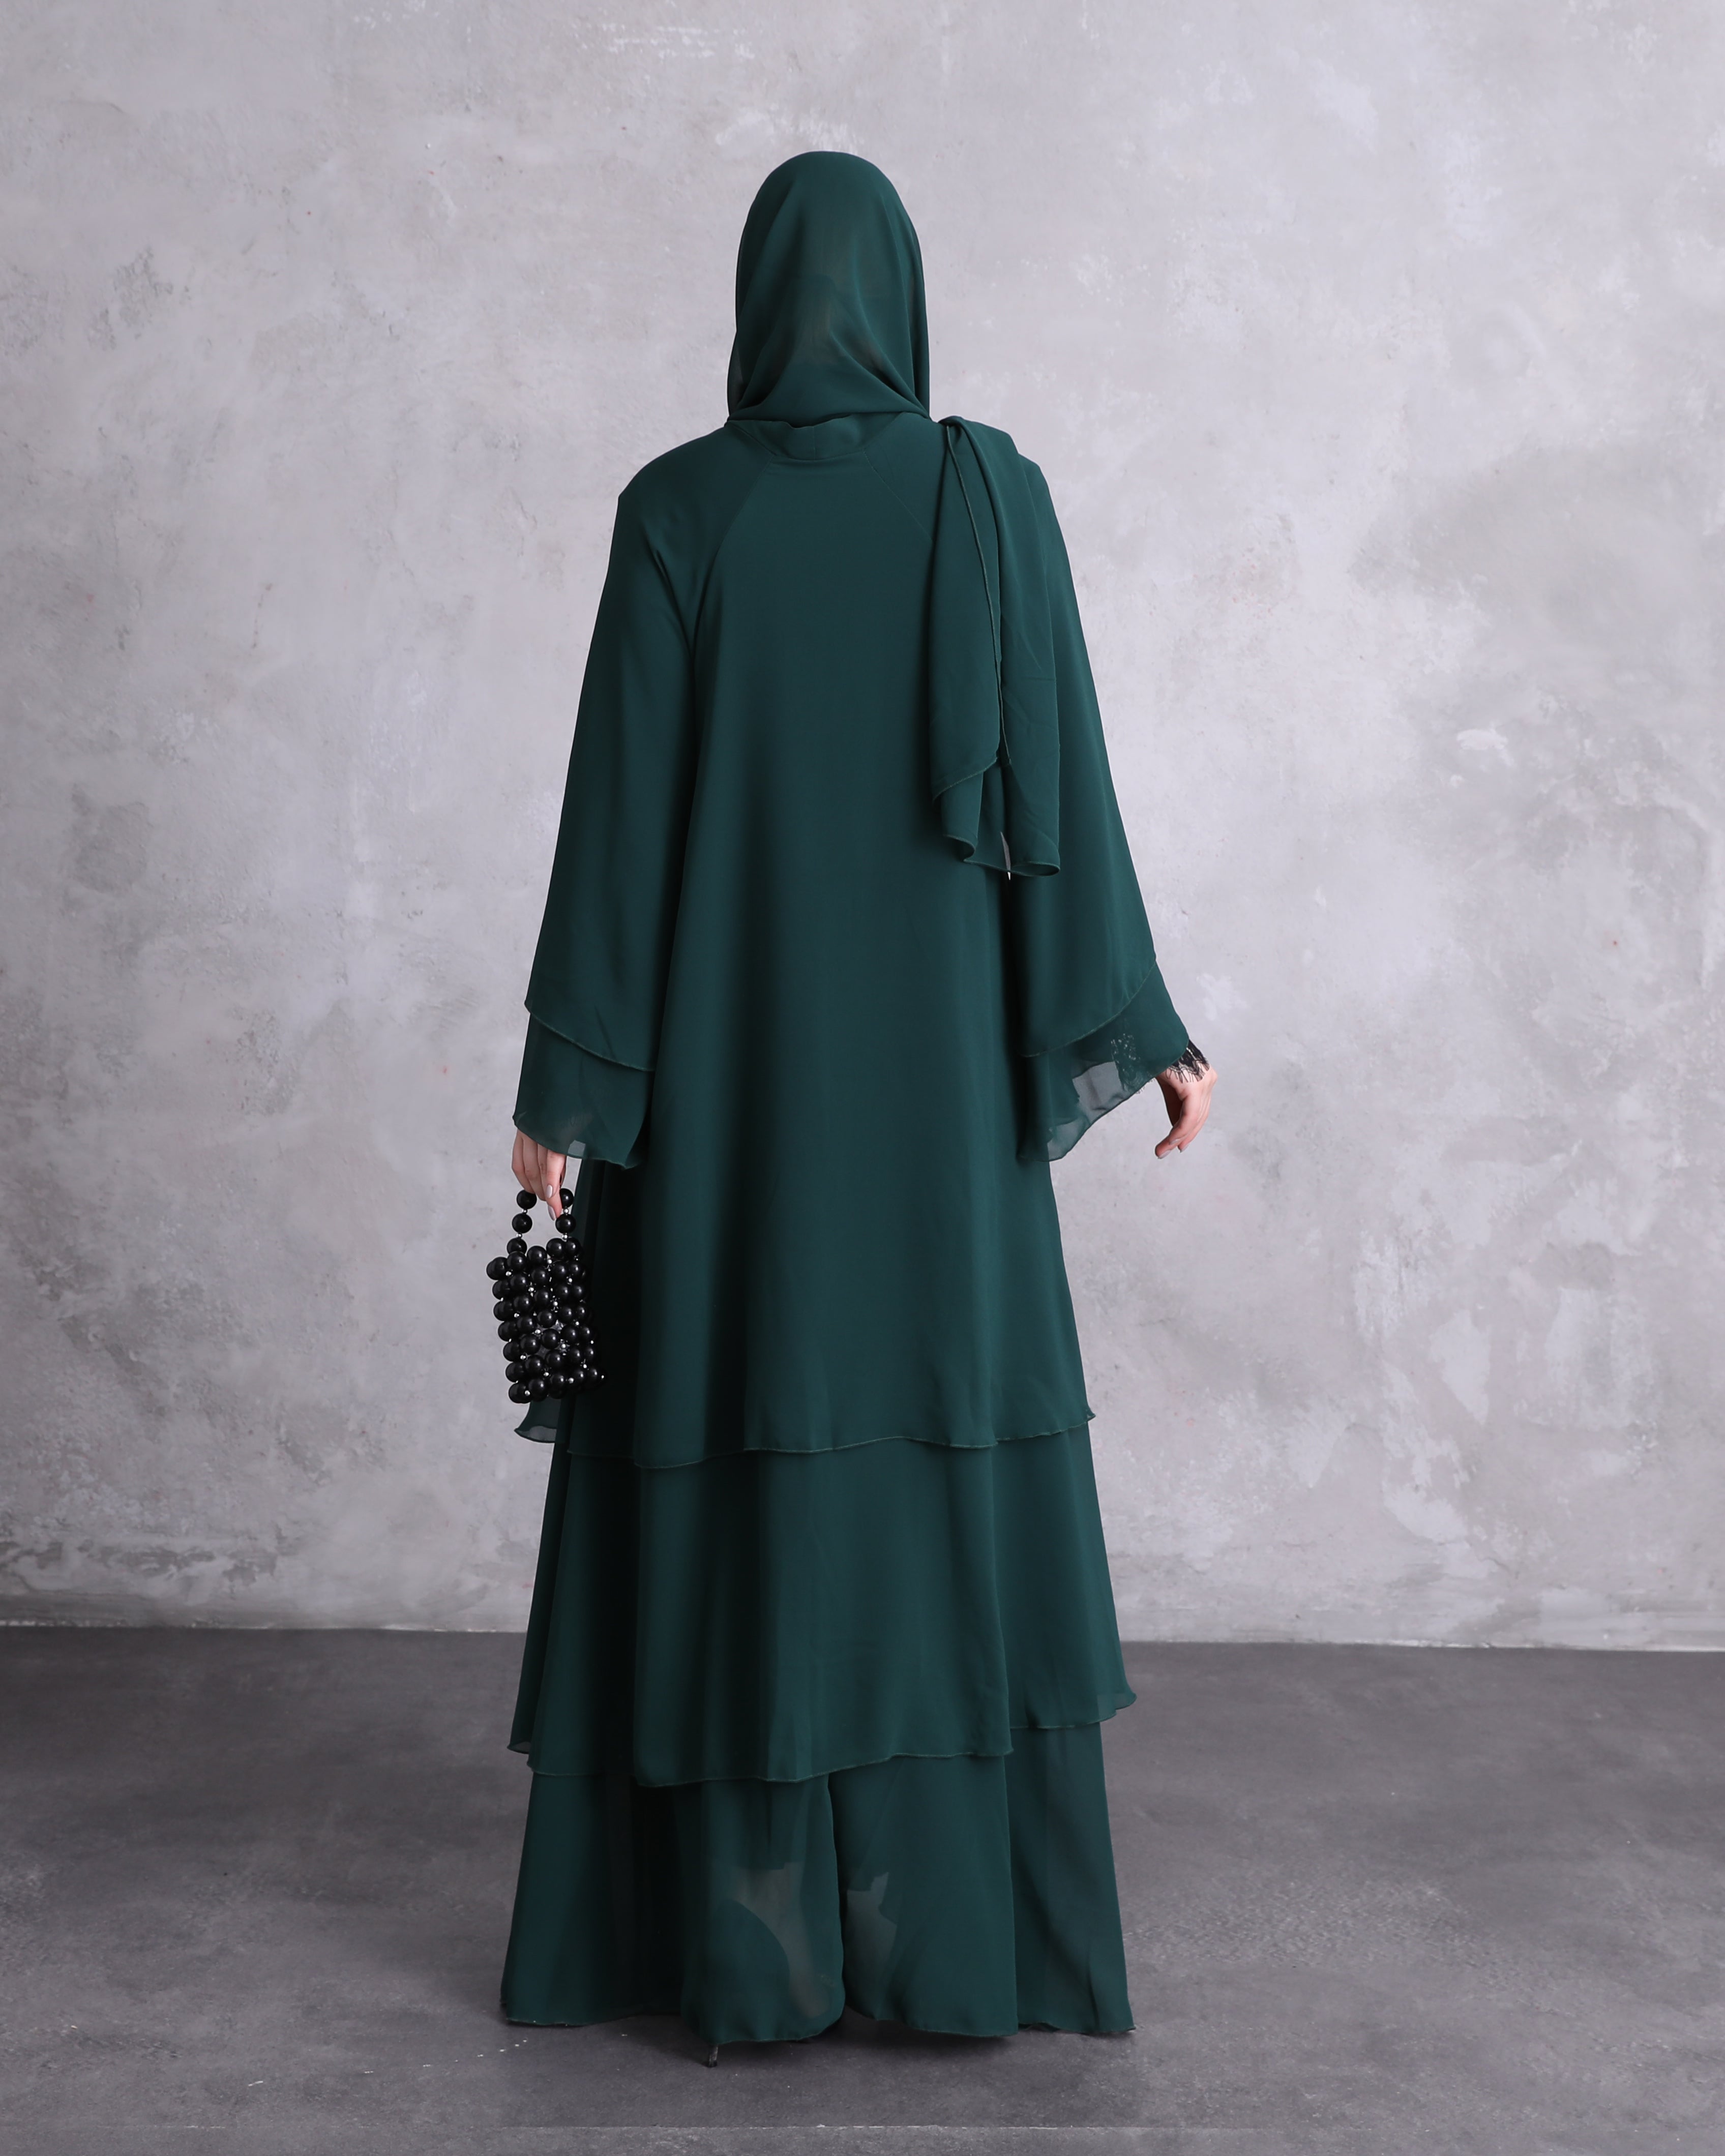 A Stunning Three-Layered Green Abaya